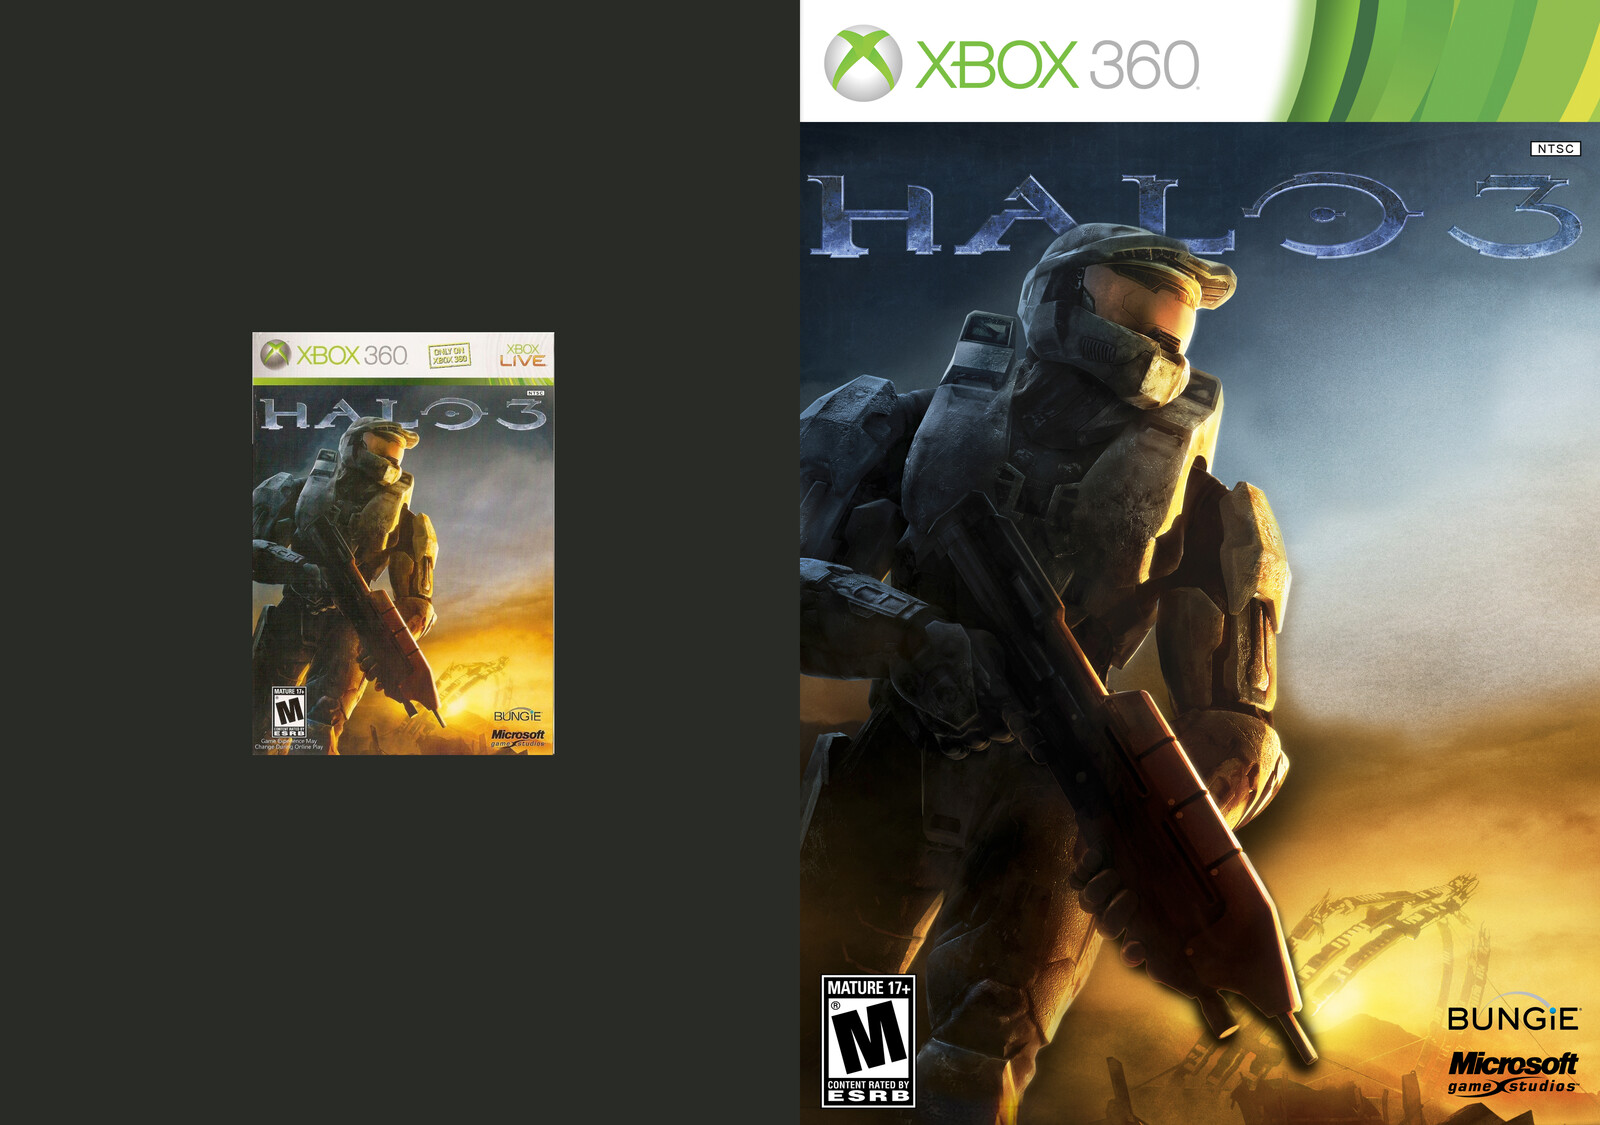 Halo 3 (original scan cover vs. upscaled)